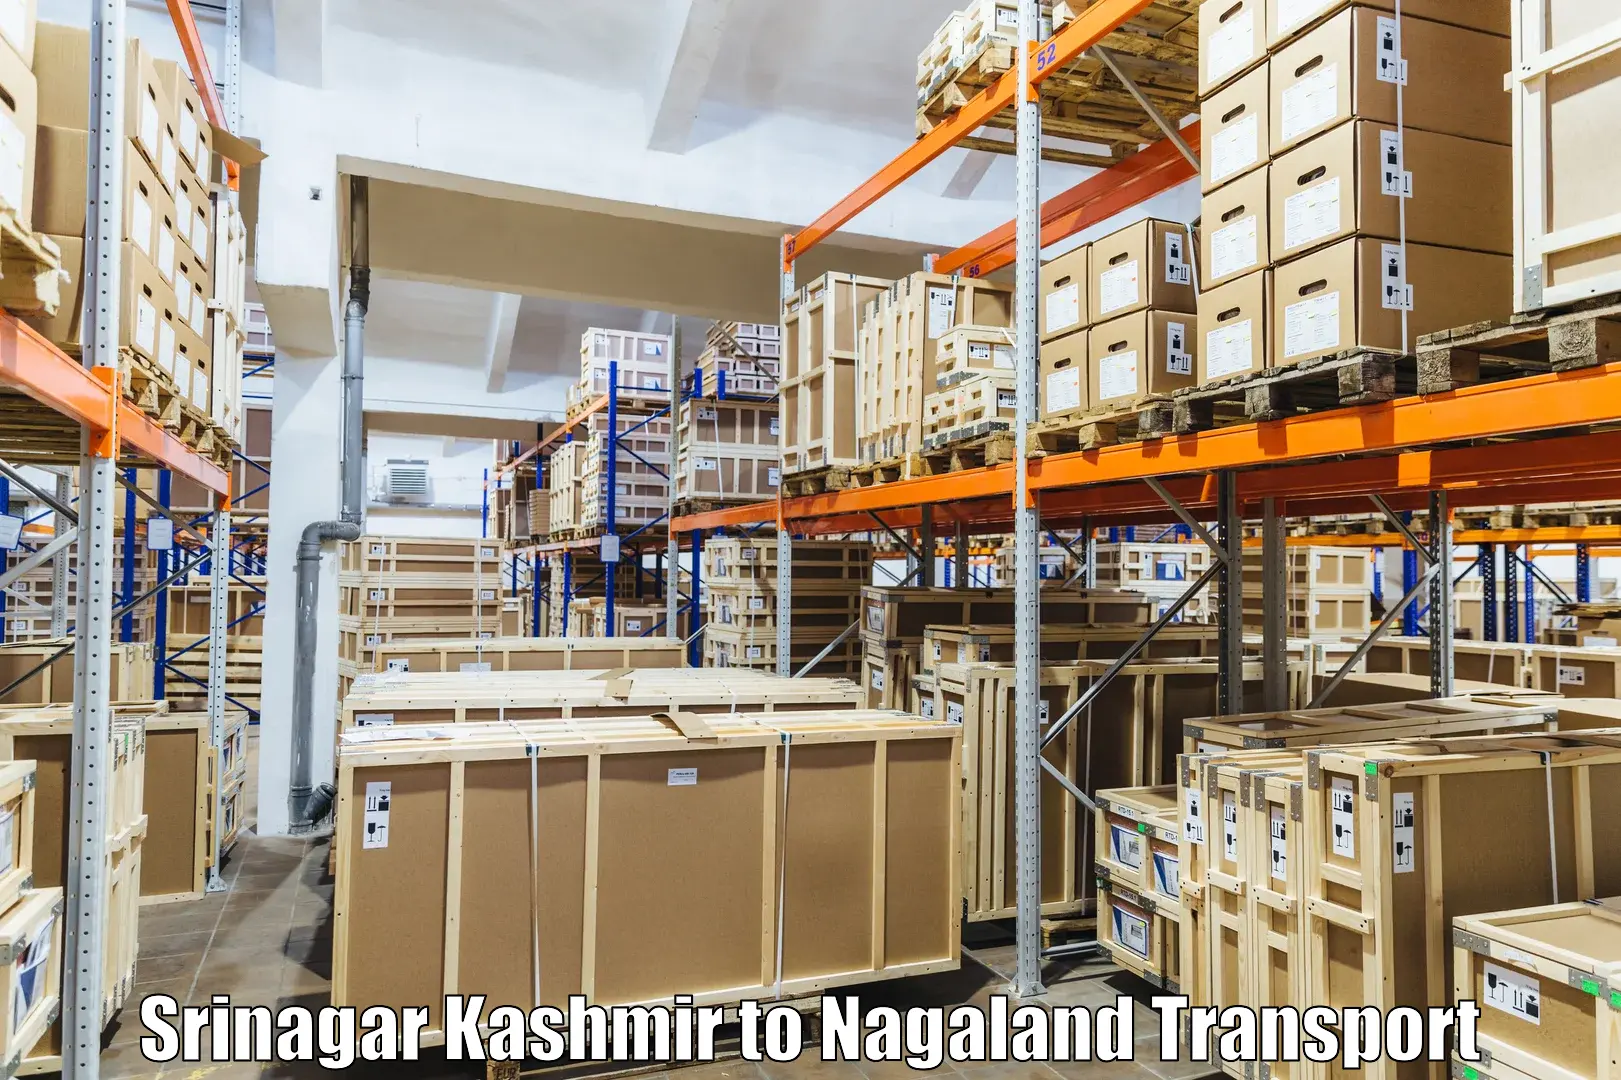 Goods delivery service Srinagar Kashmir to Dimapur